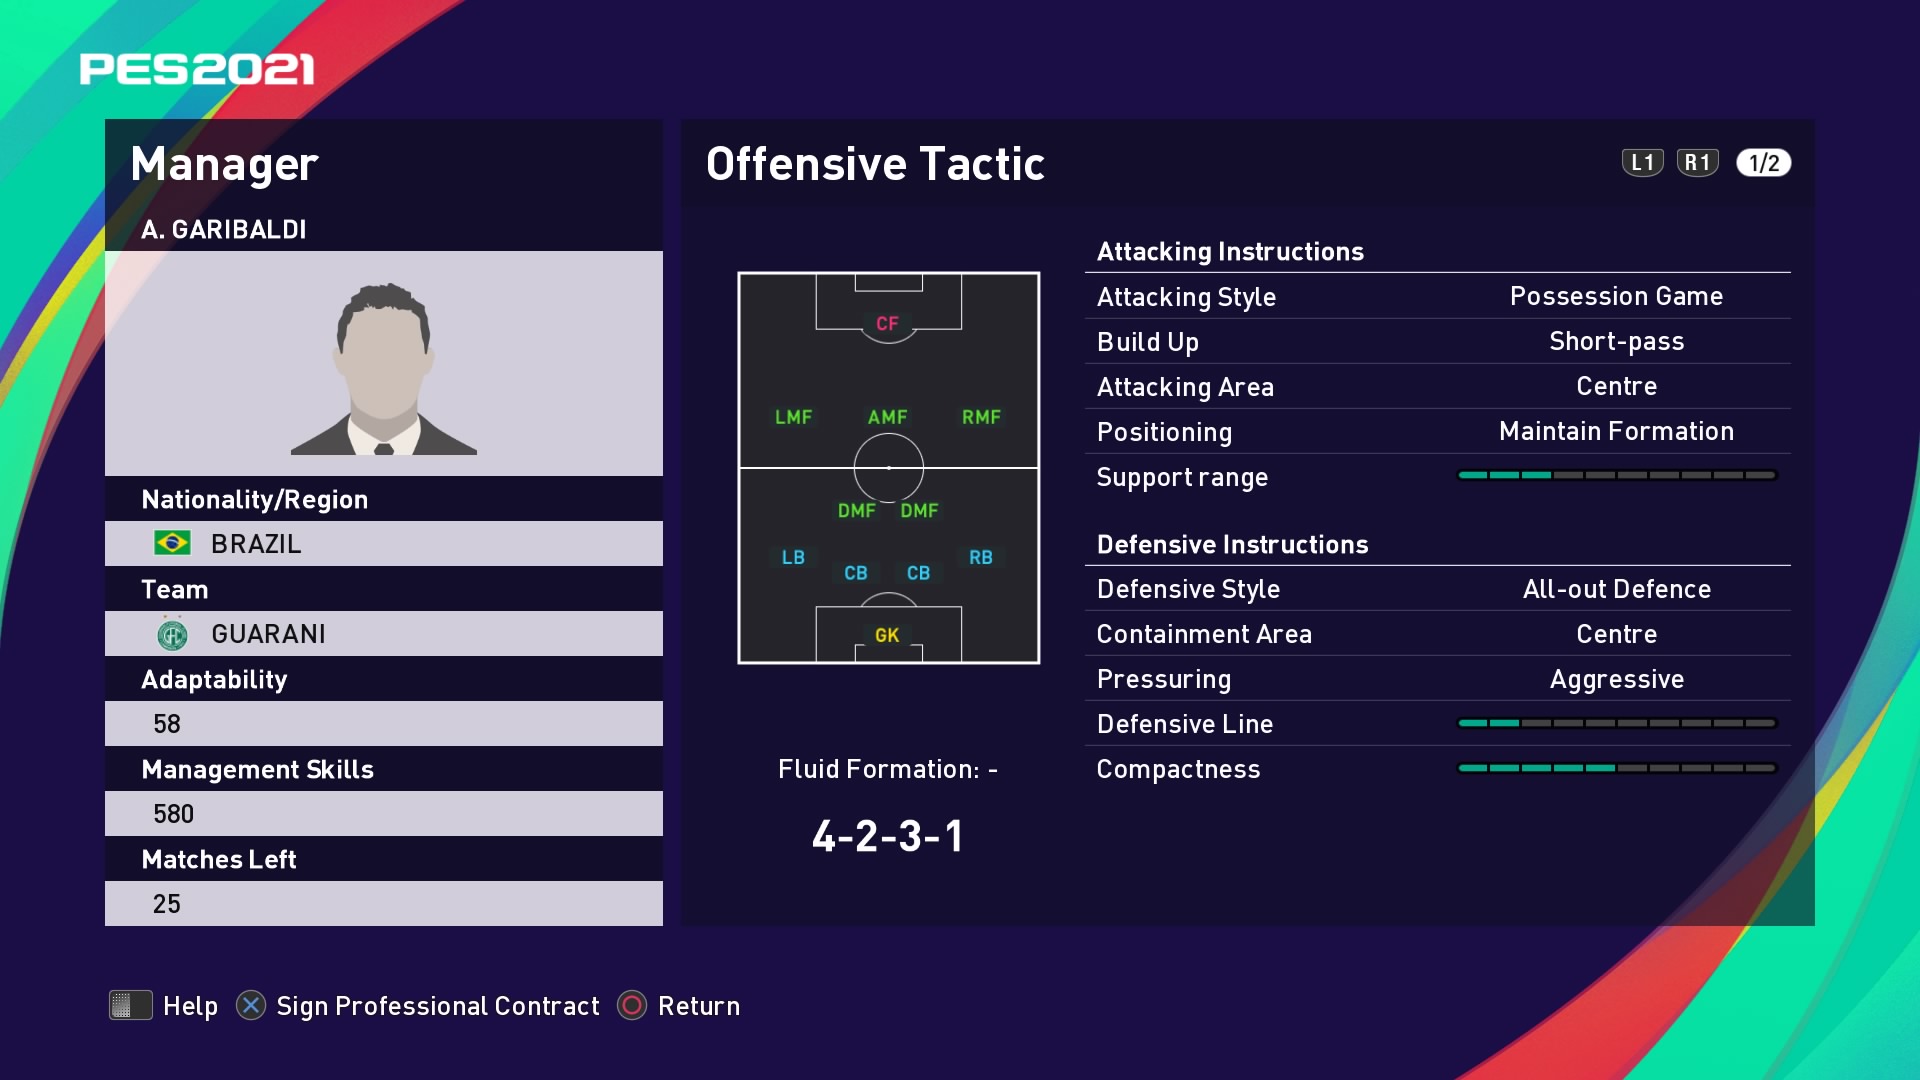 A. Garibaldi (Thiago Carpini) Offensive Tactic in PES 2021 myClub